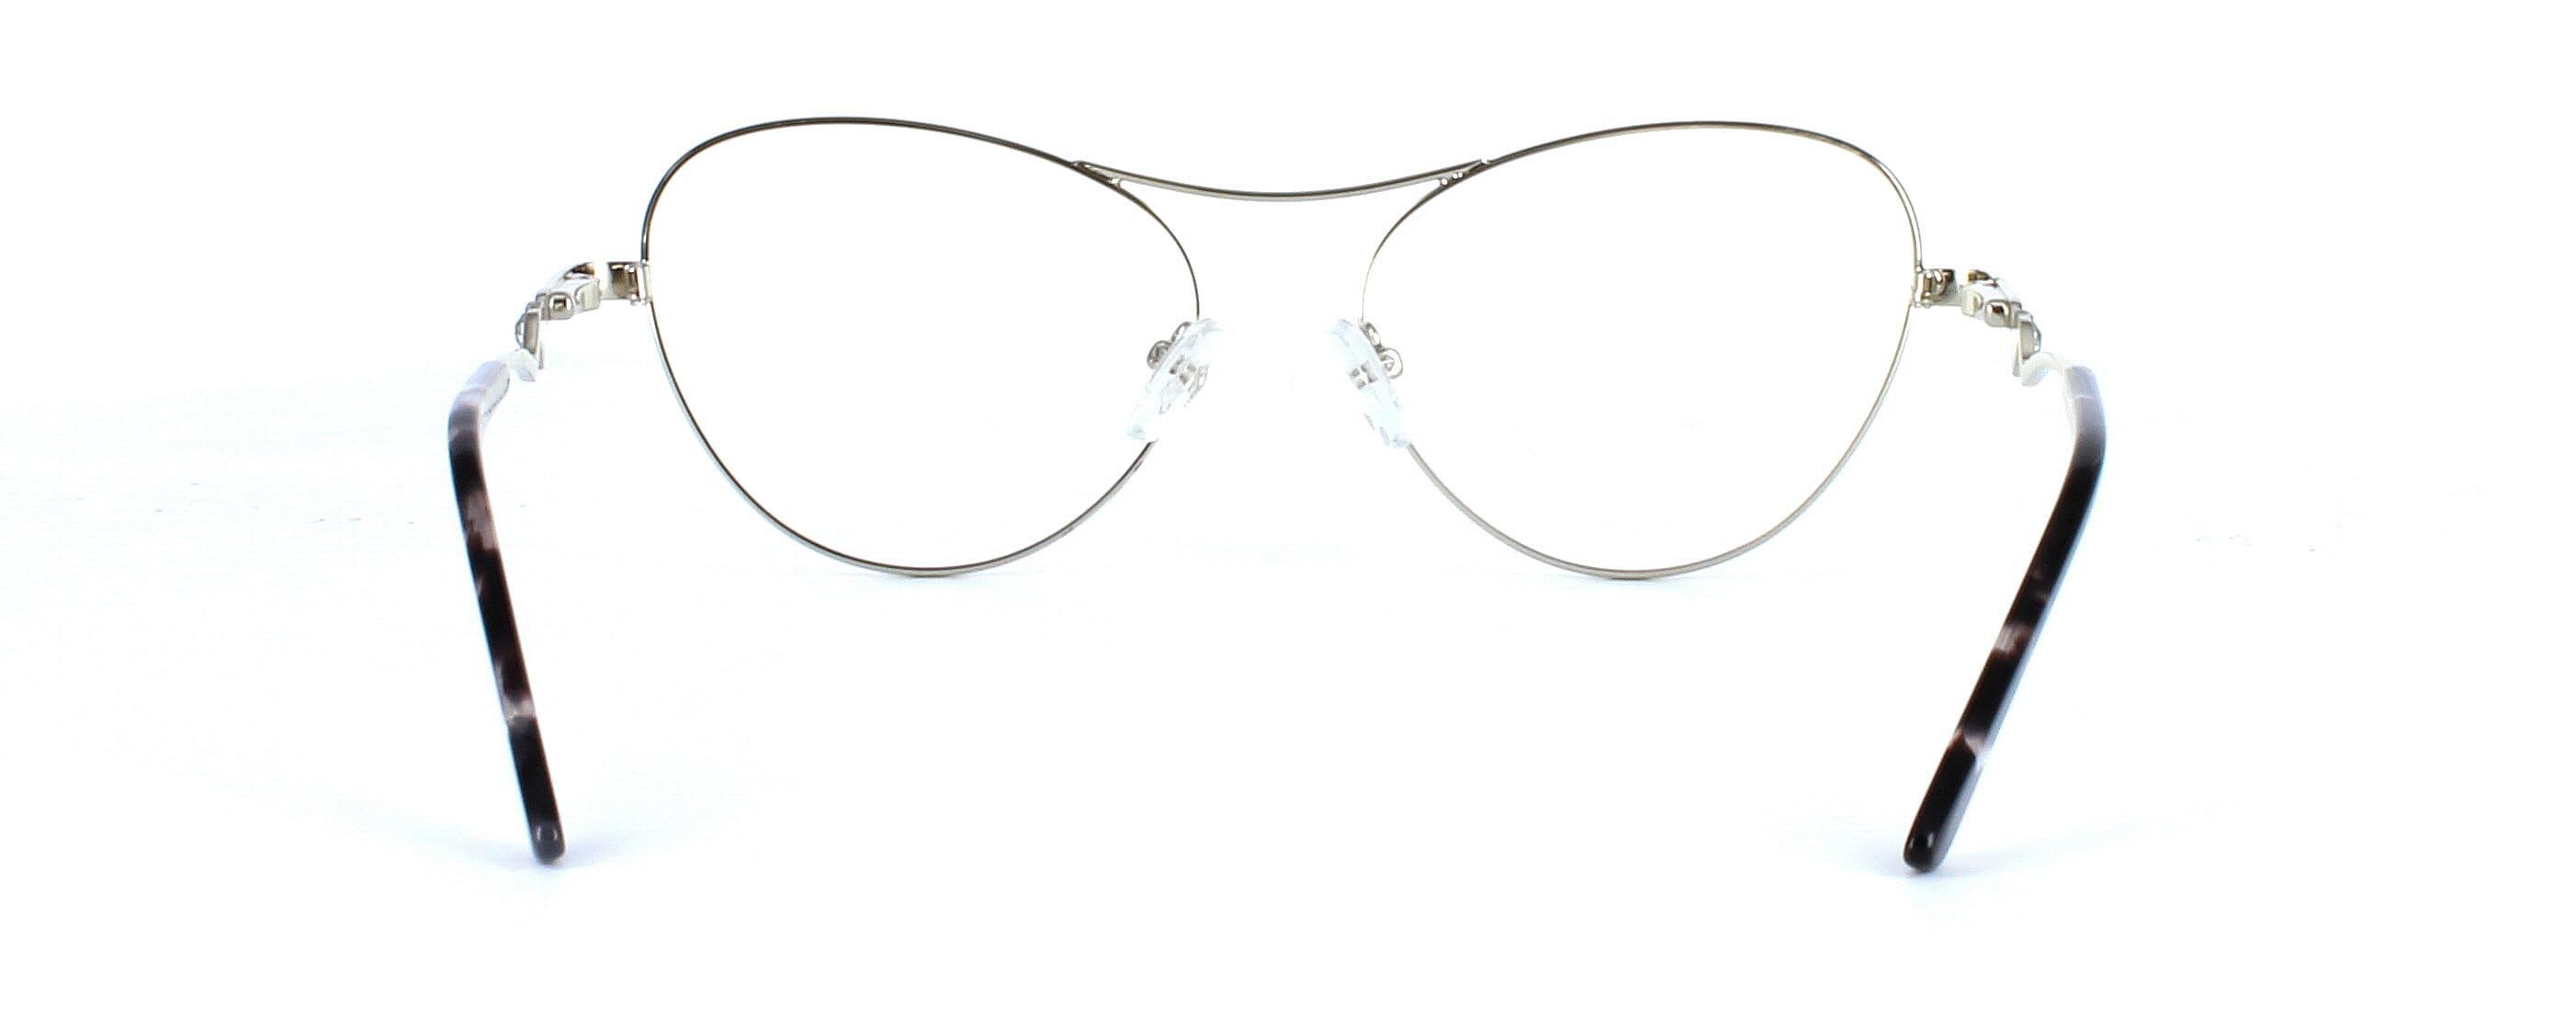 Auriga - Ladies 2-tone black & silver metal glasses - image view 3